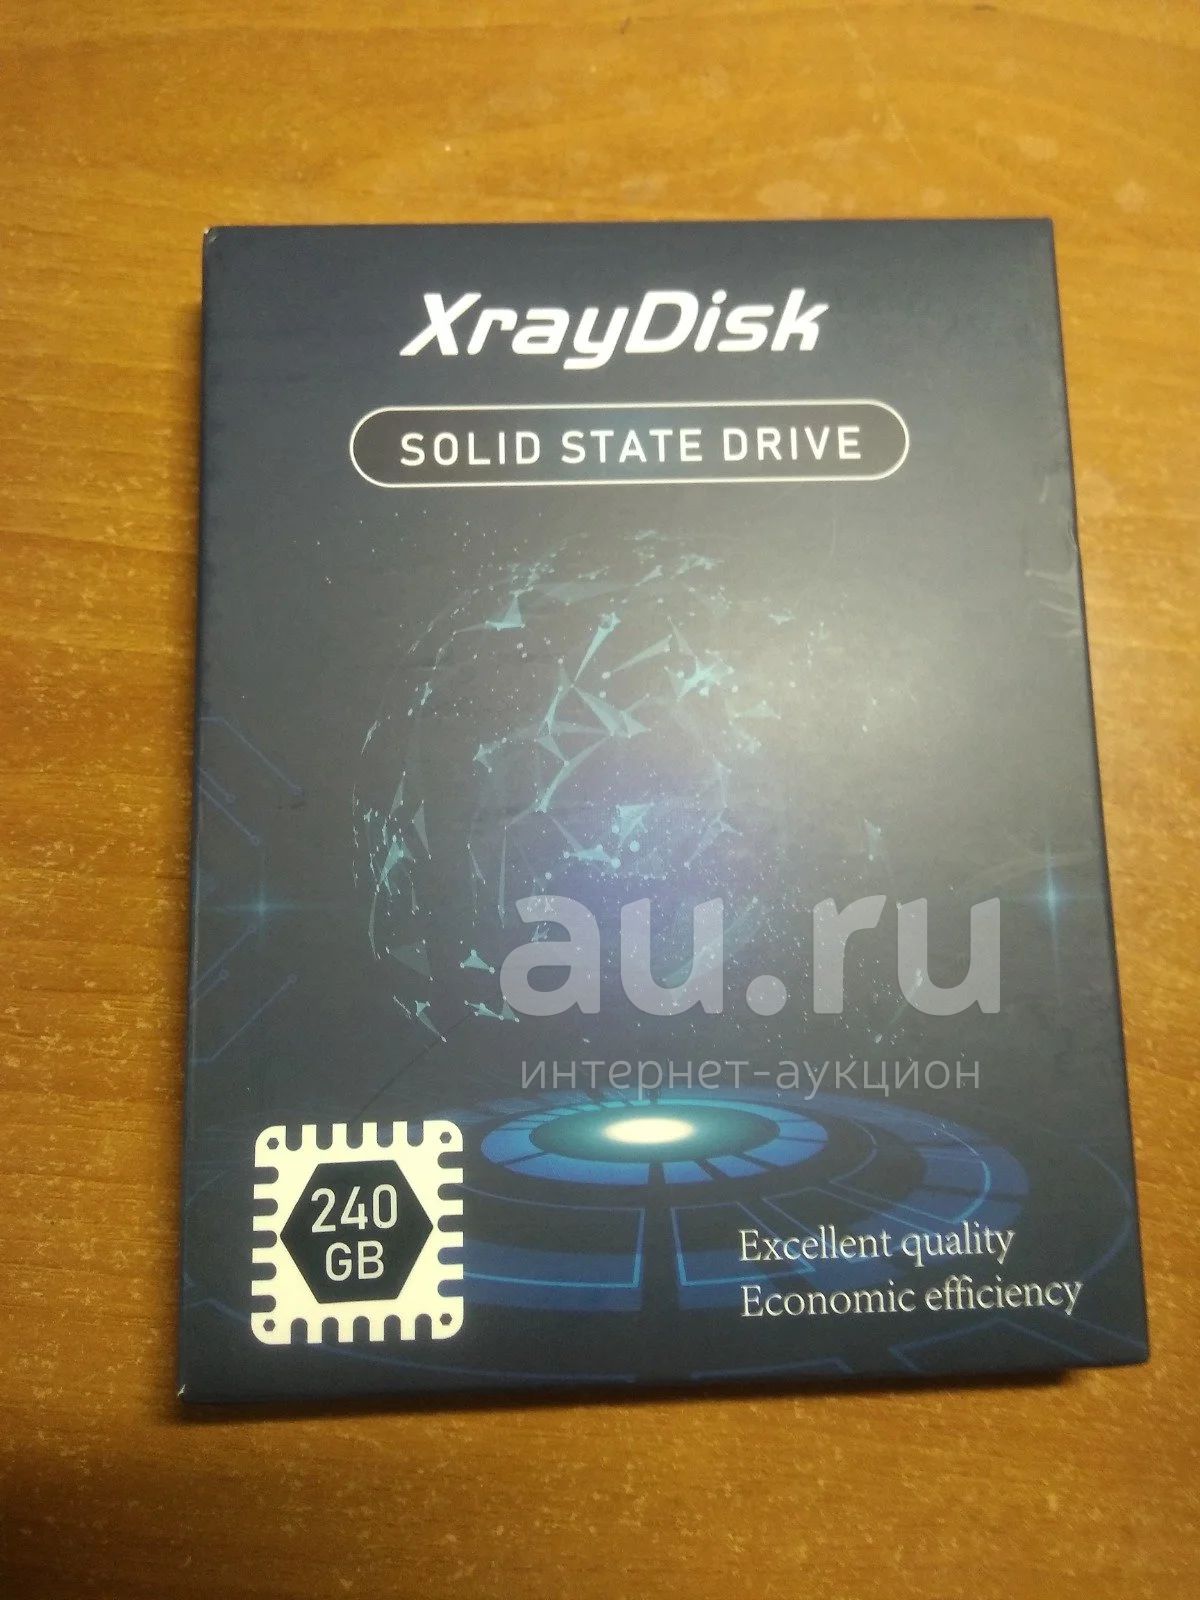 Xray ssd. XRAY Disk SSD.